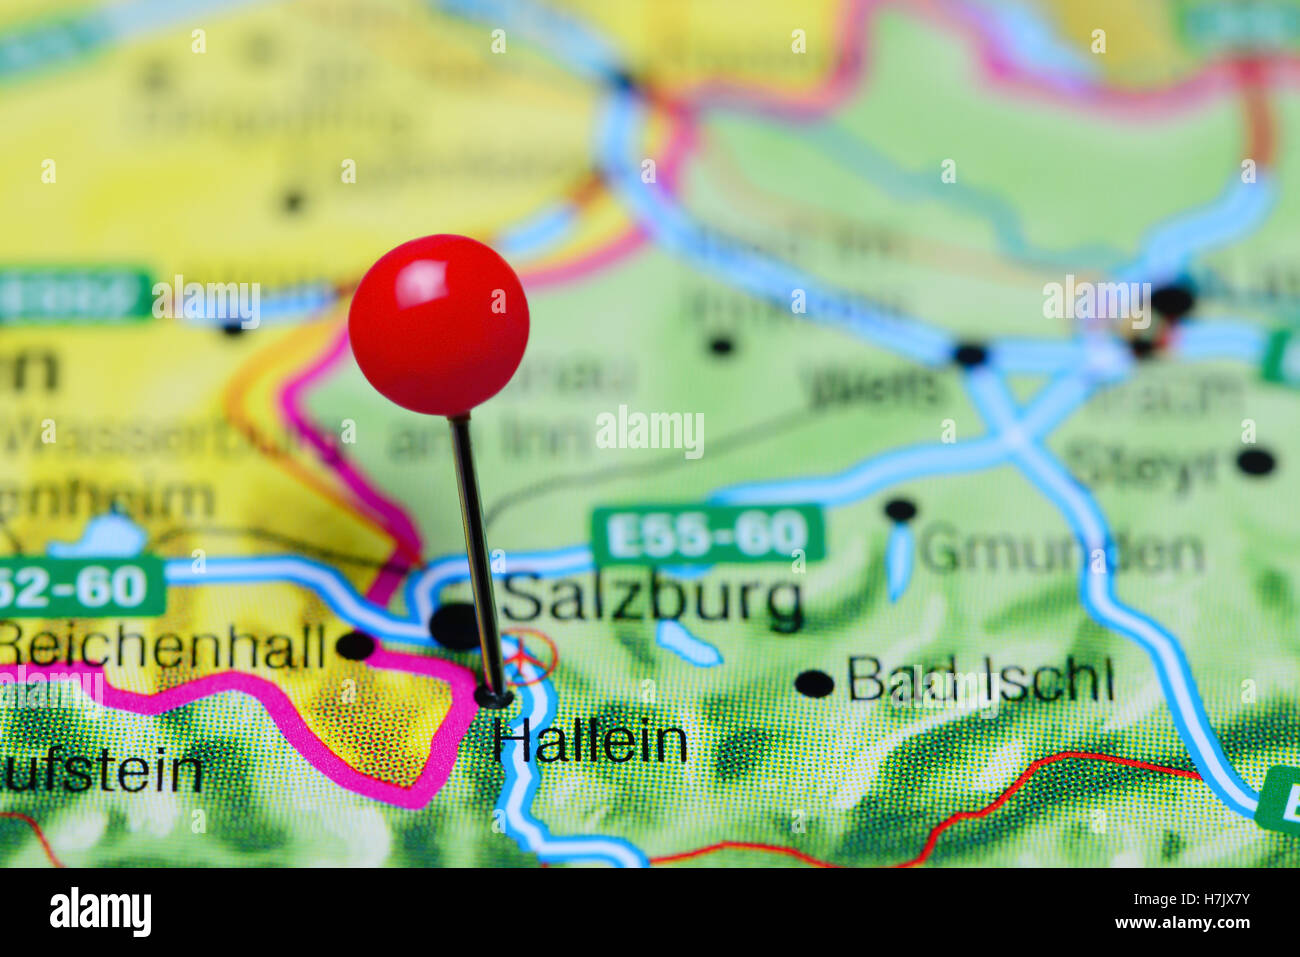 Hallein pinned on a map of Austria Stock Photo